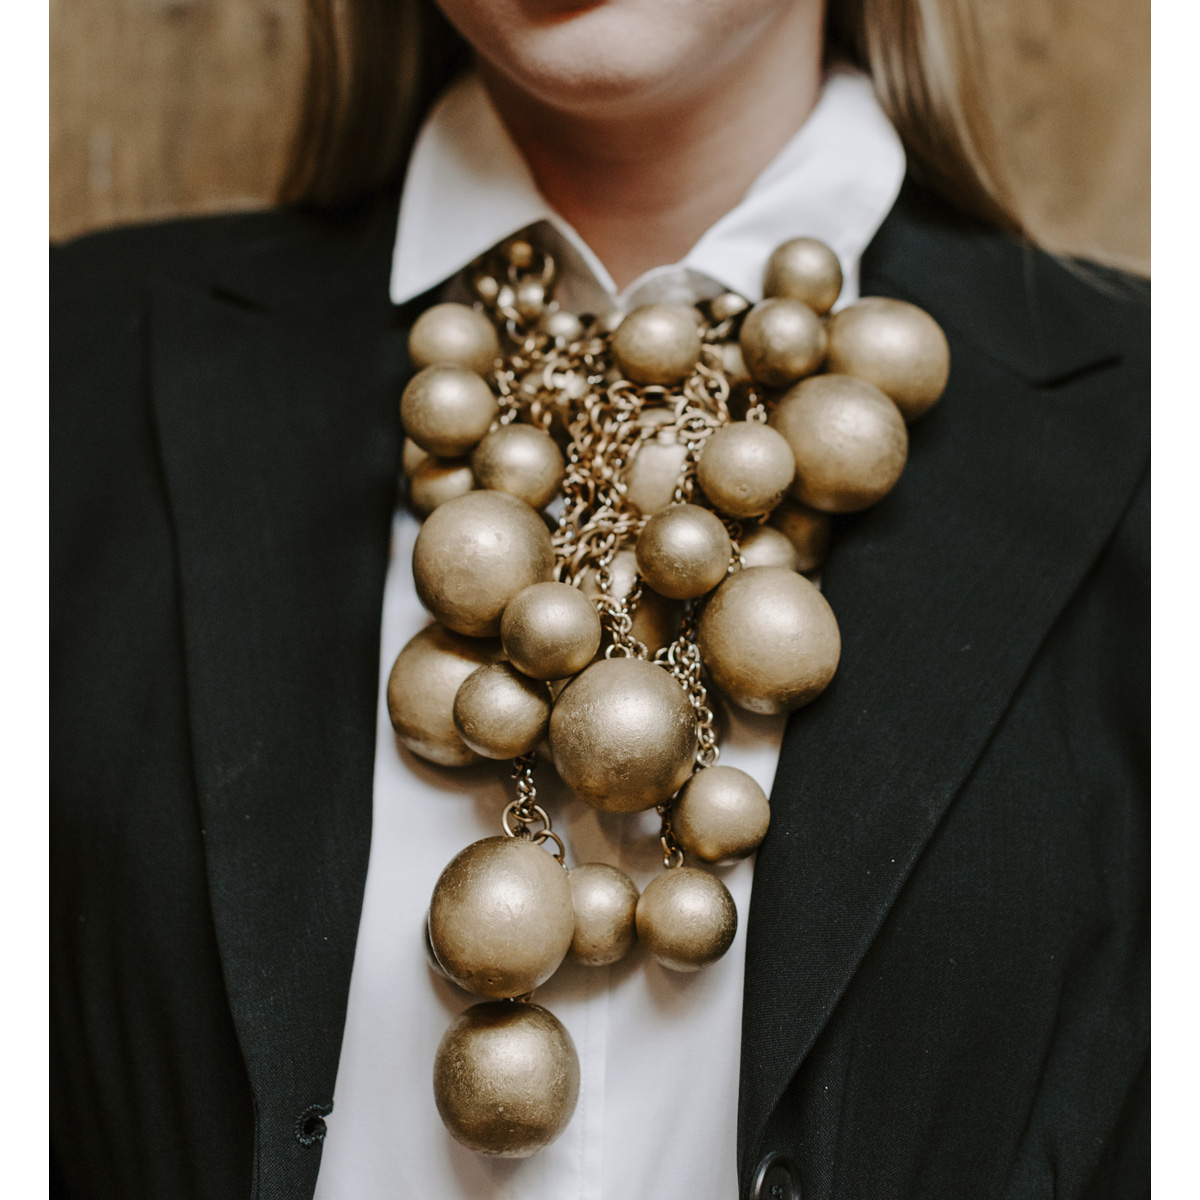 fashionable chunky necklaces, season's hottest looks, vintage bib necklace